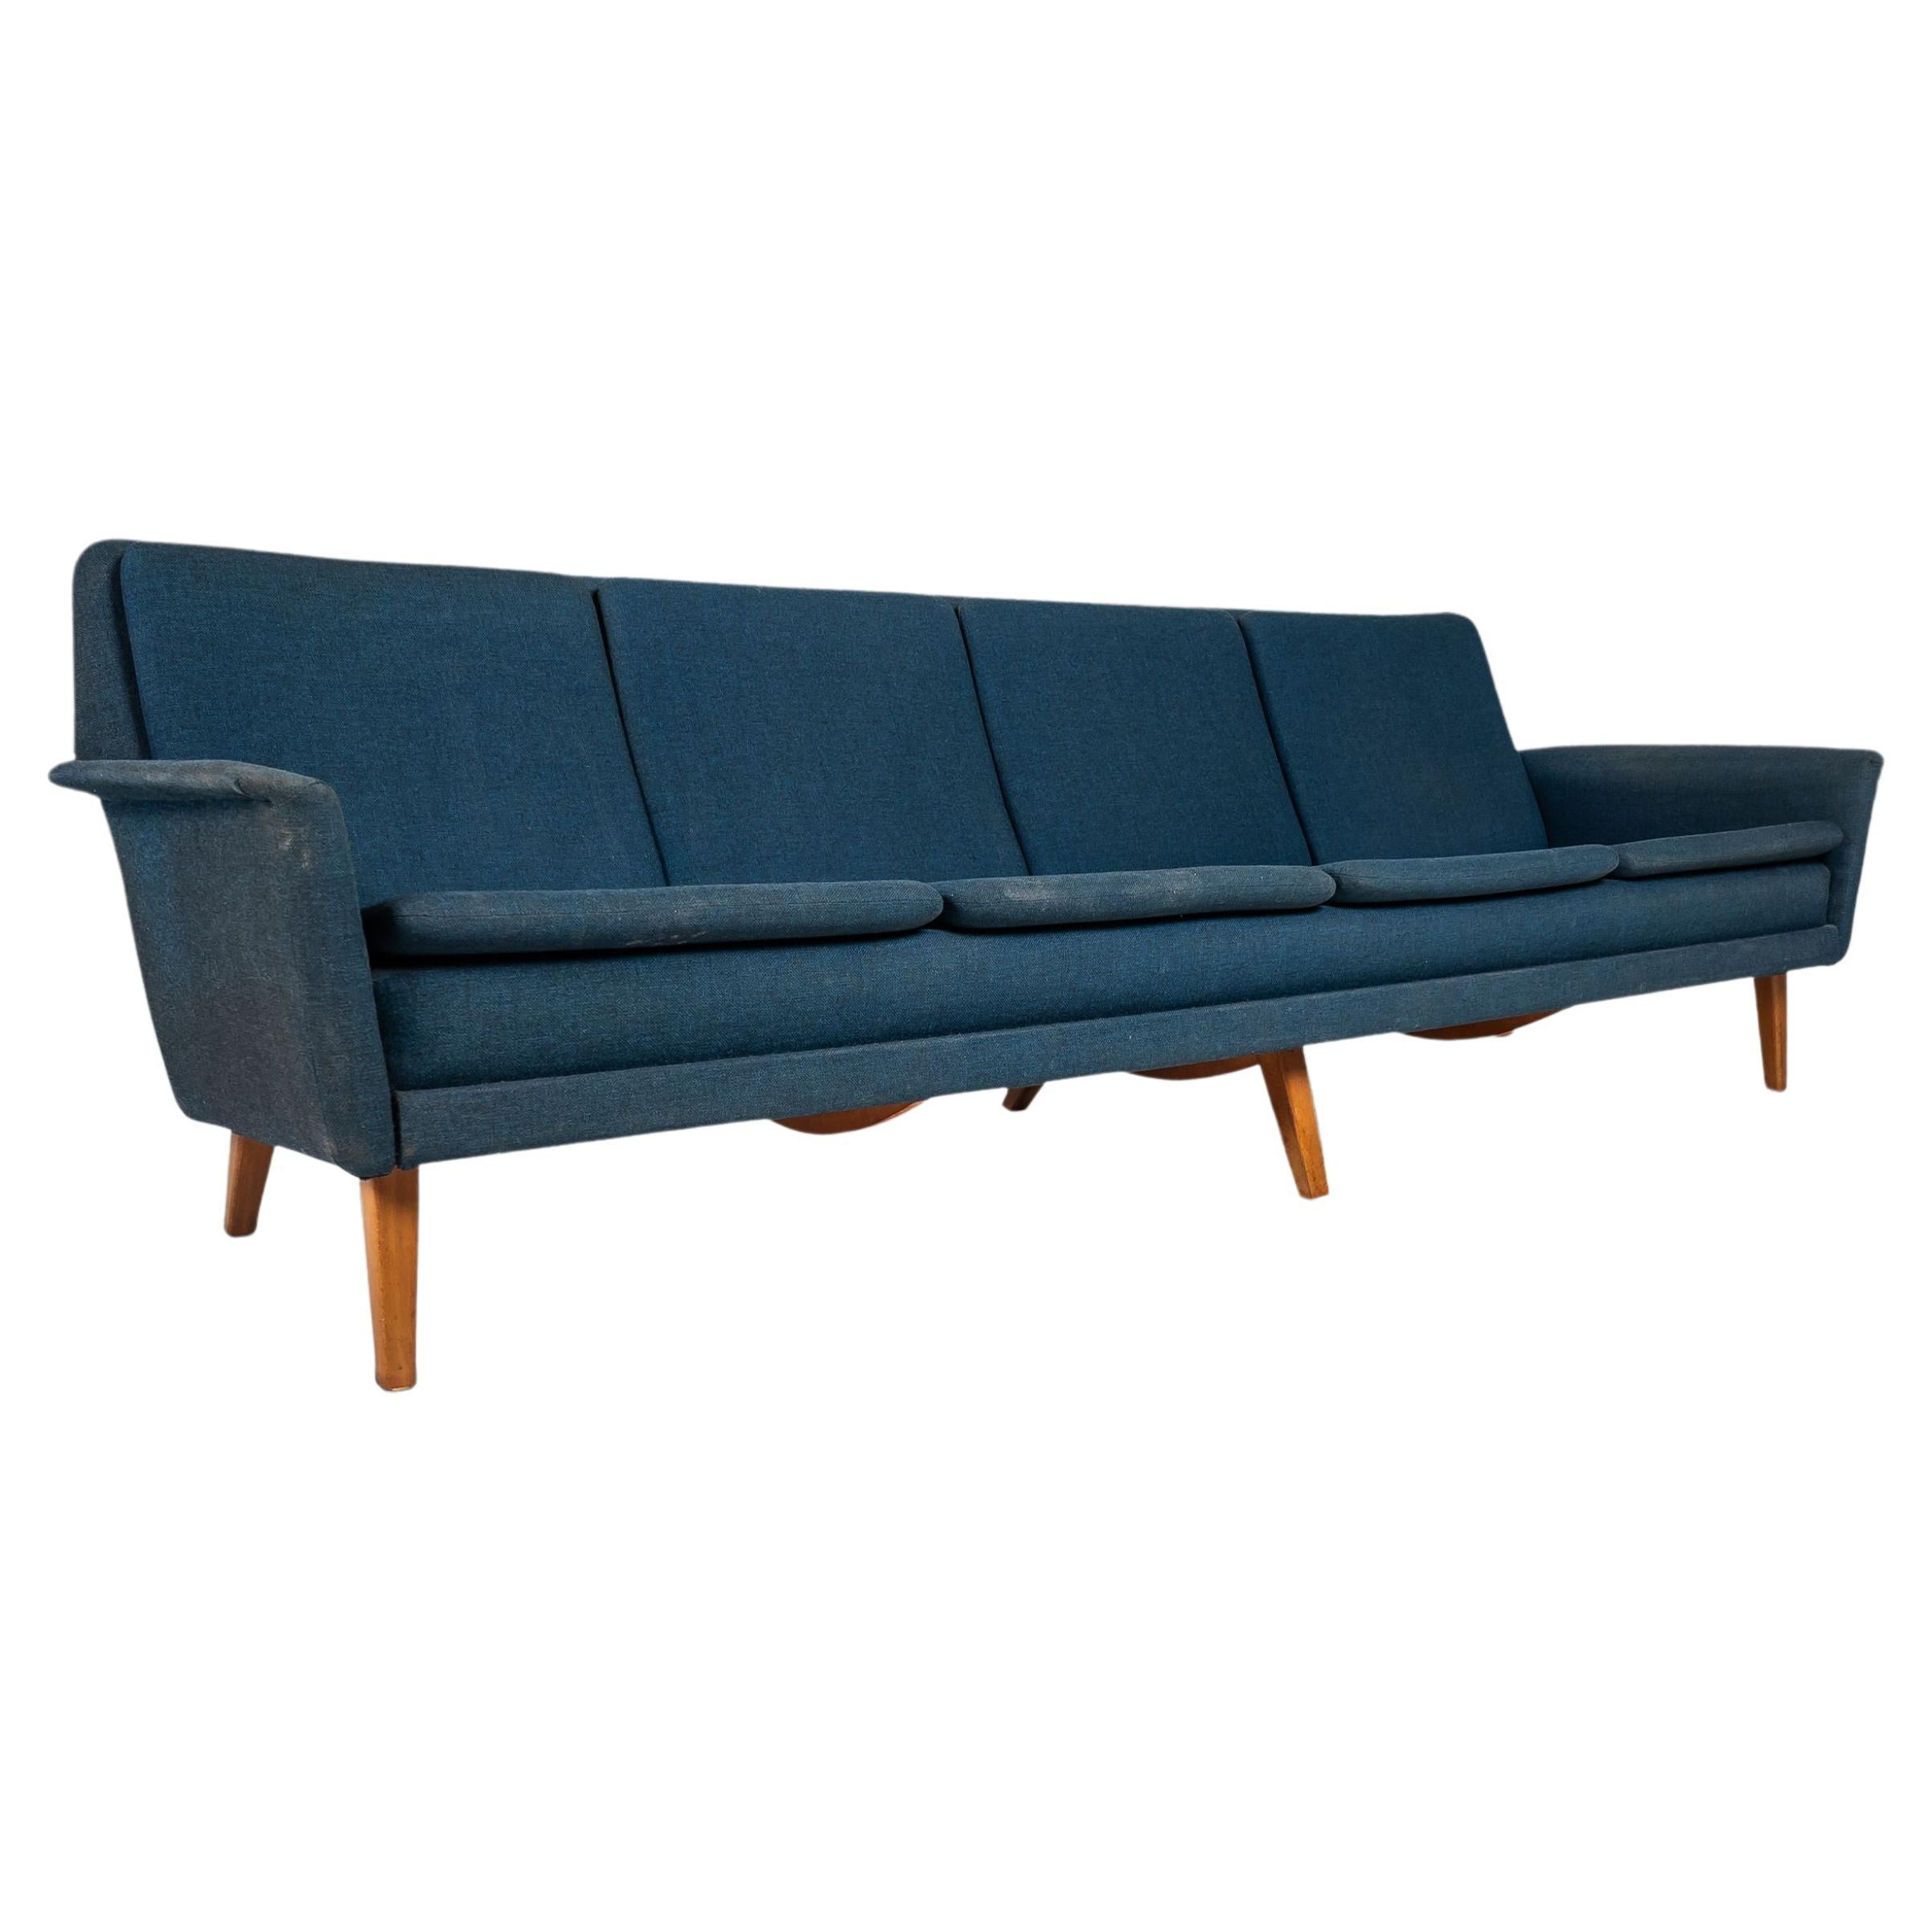 Mid-Century Modern Four-Seat Sofa by Folke Ohlsson & Fritz Hansen, Denmark, 1960